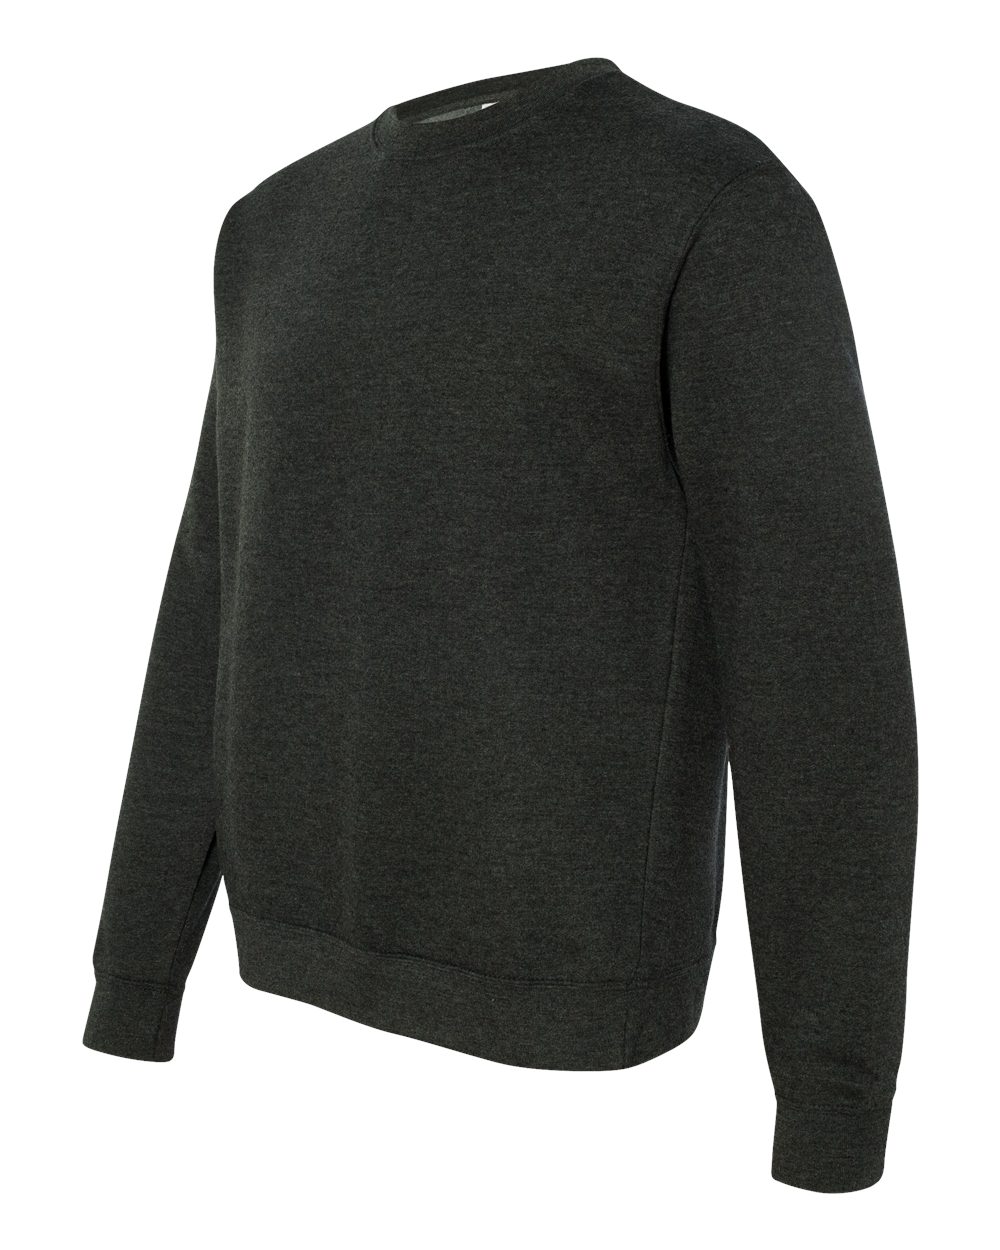 Independent Trading Co. Crewneck Sweatshirt - SS3000